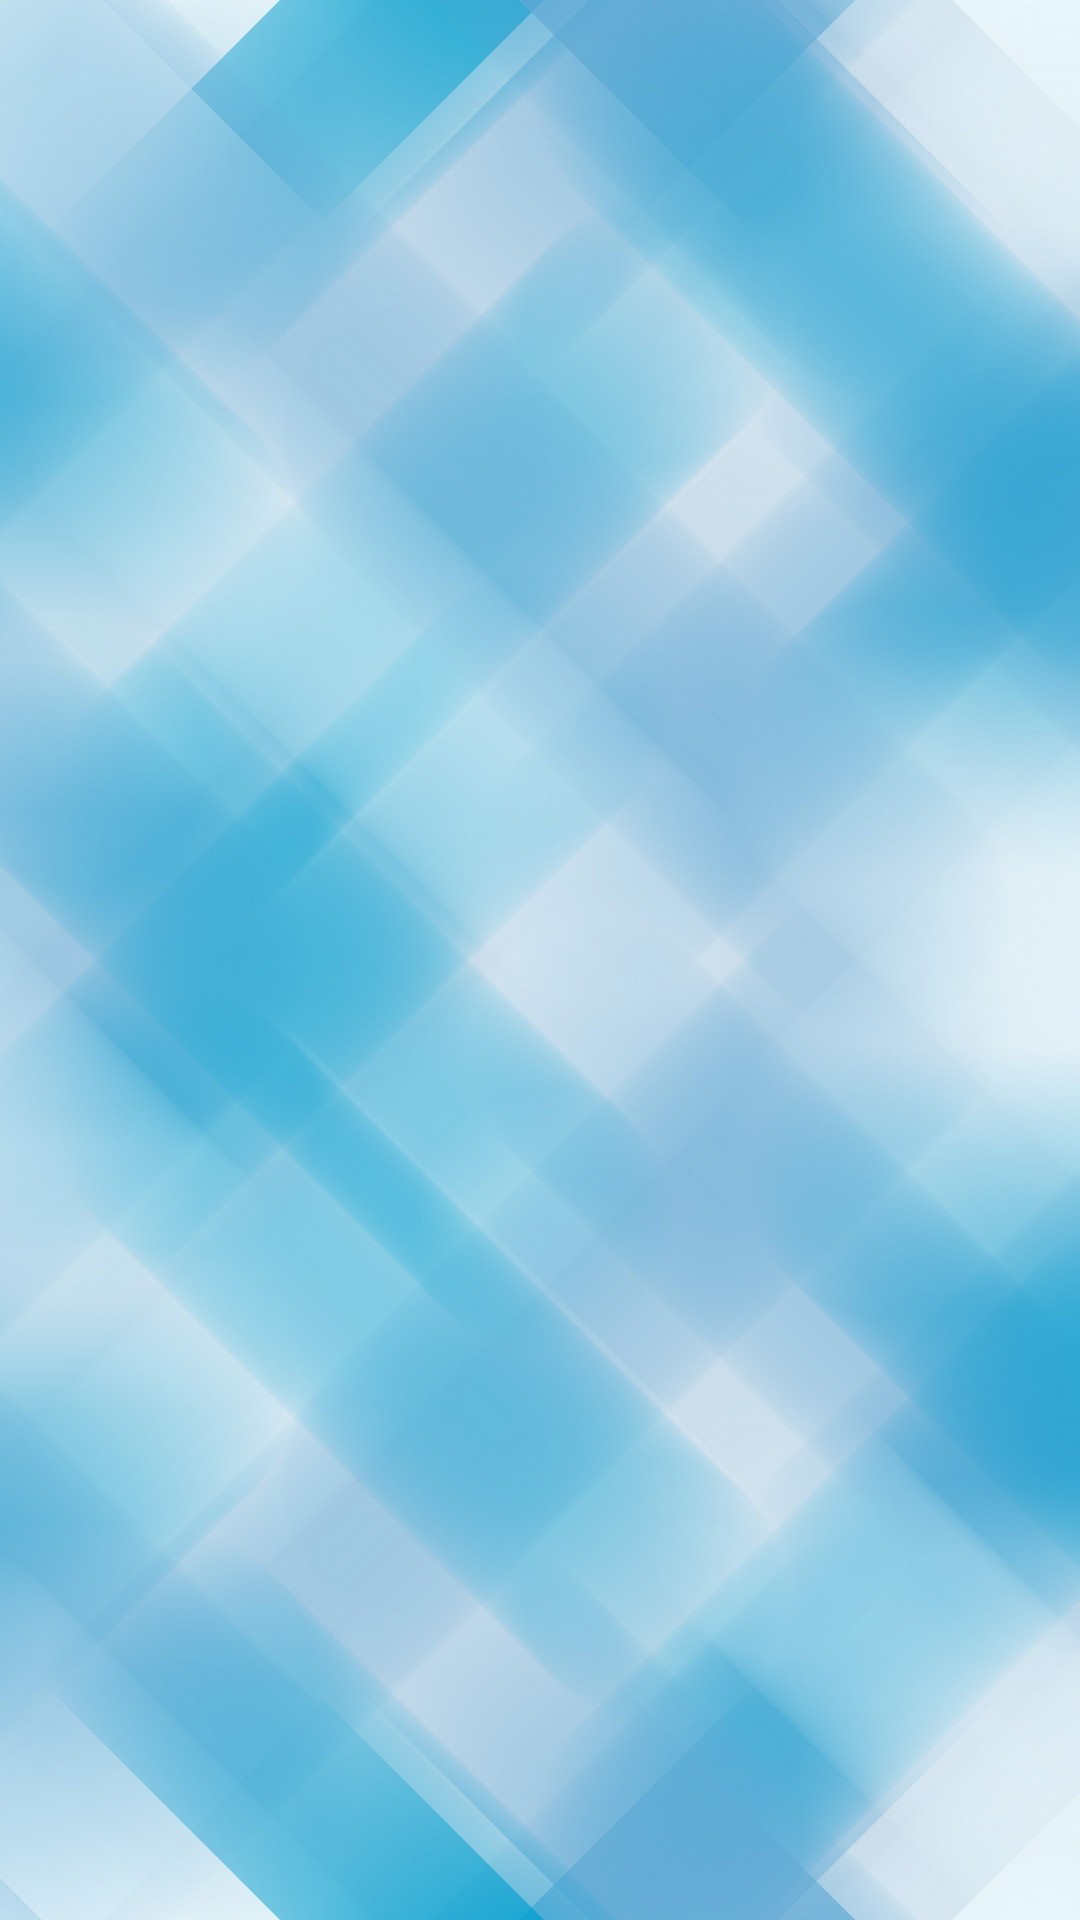 Blue iPhone Wallpaper Cute resolution 1080x1920